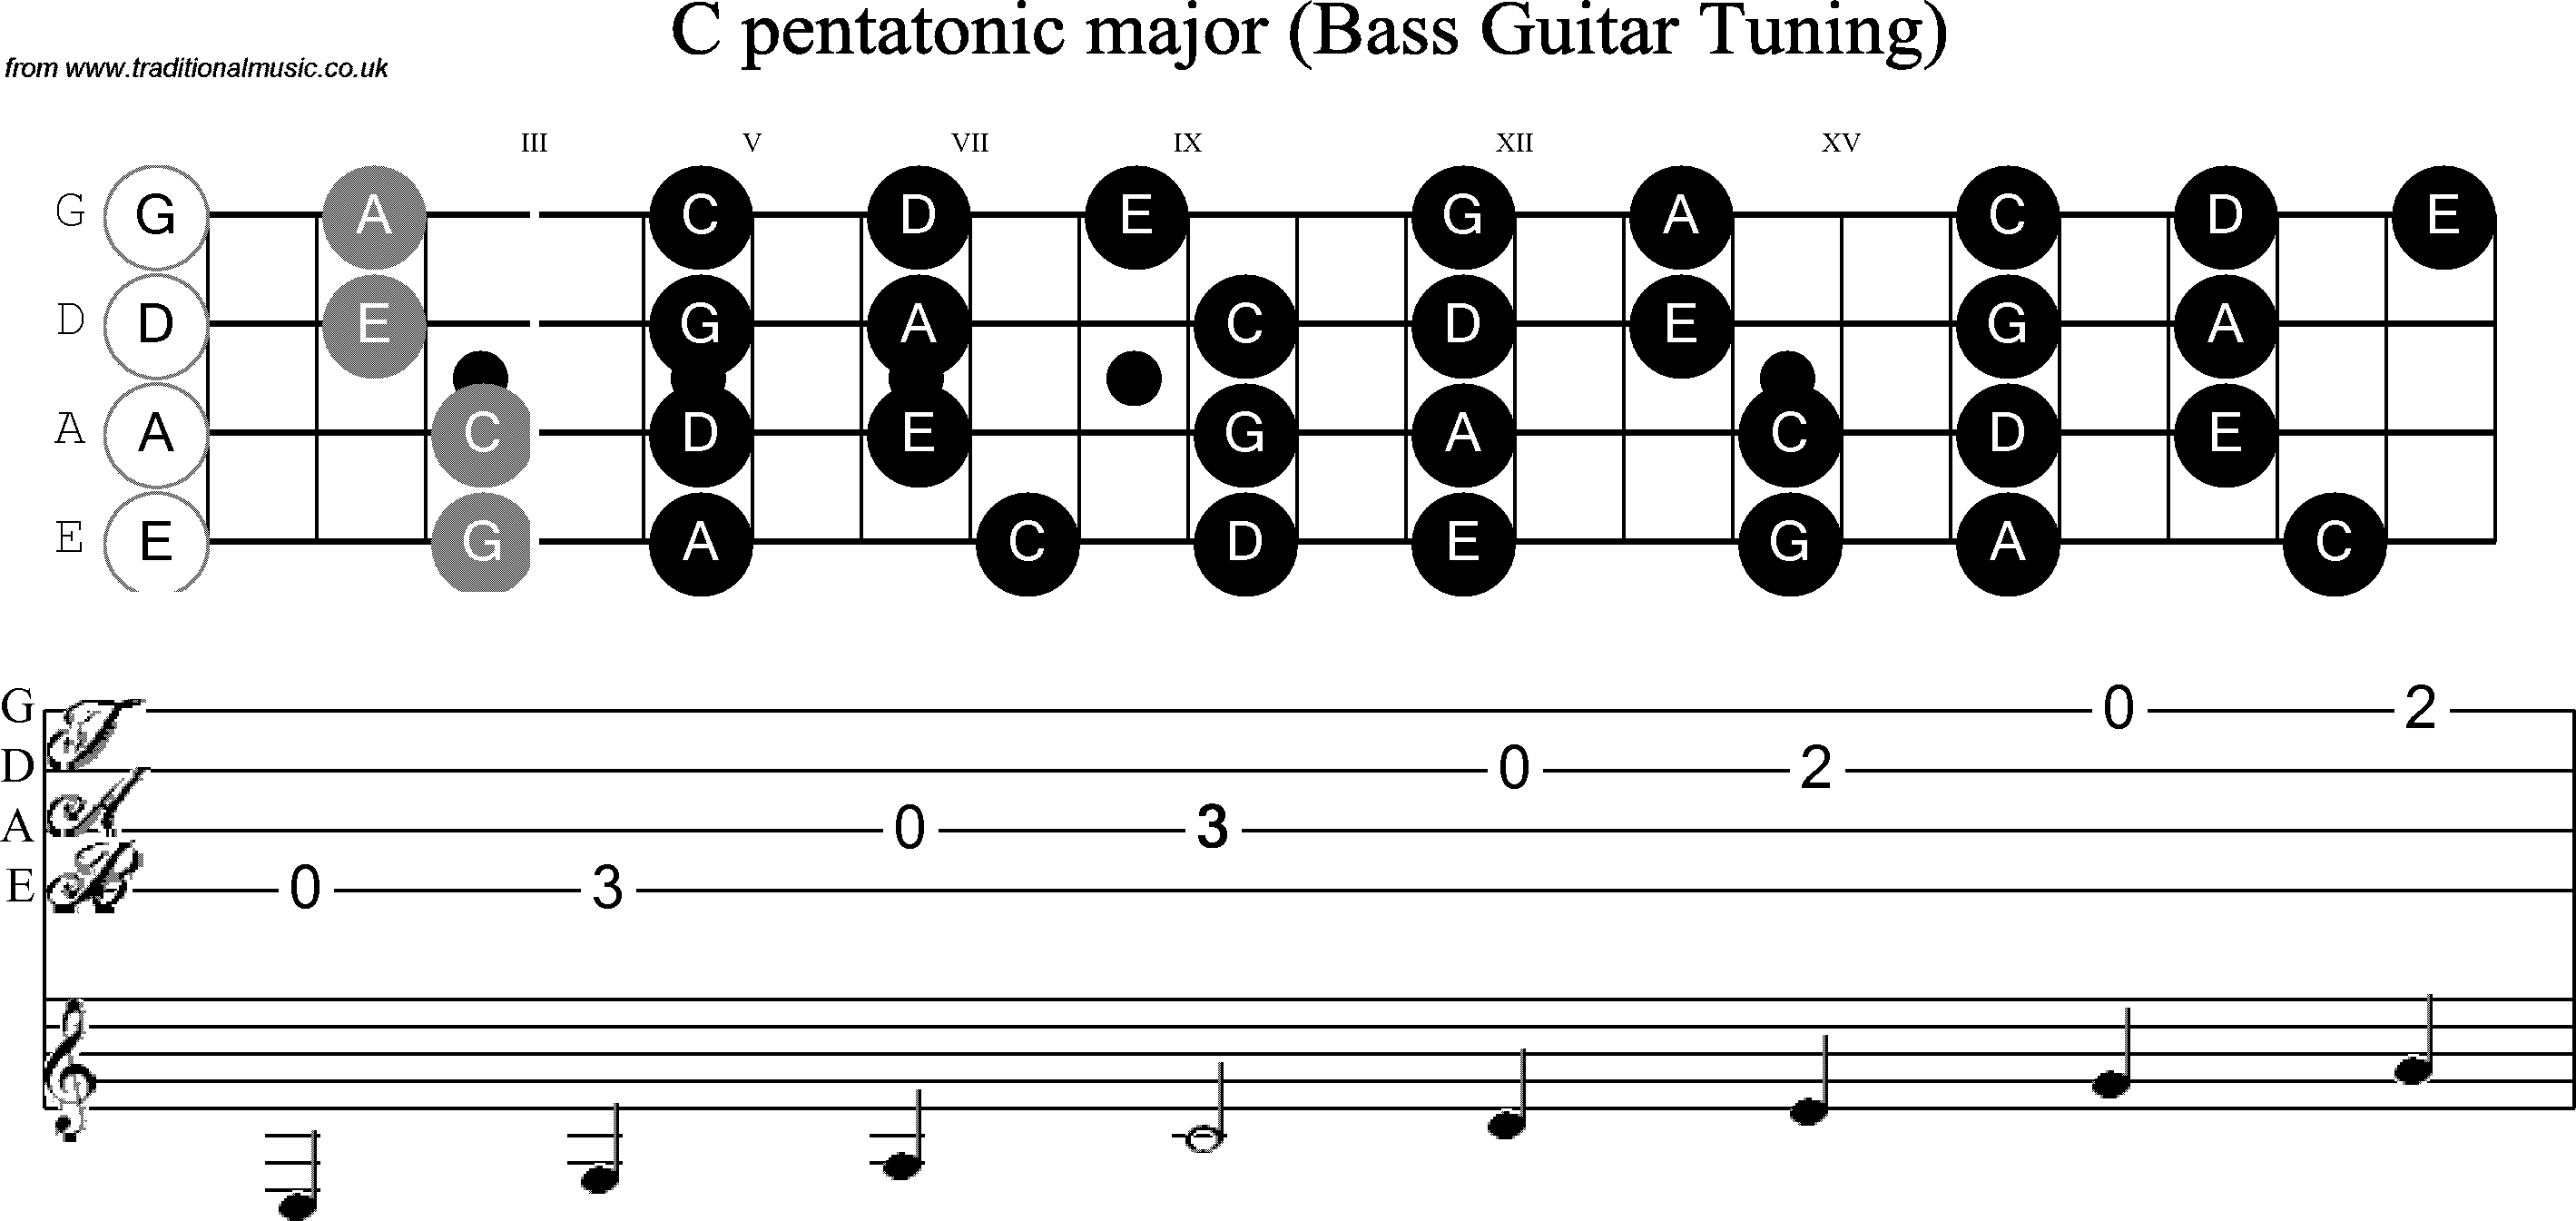 C Standard Tuning Bass